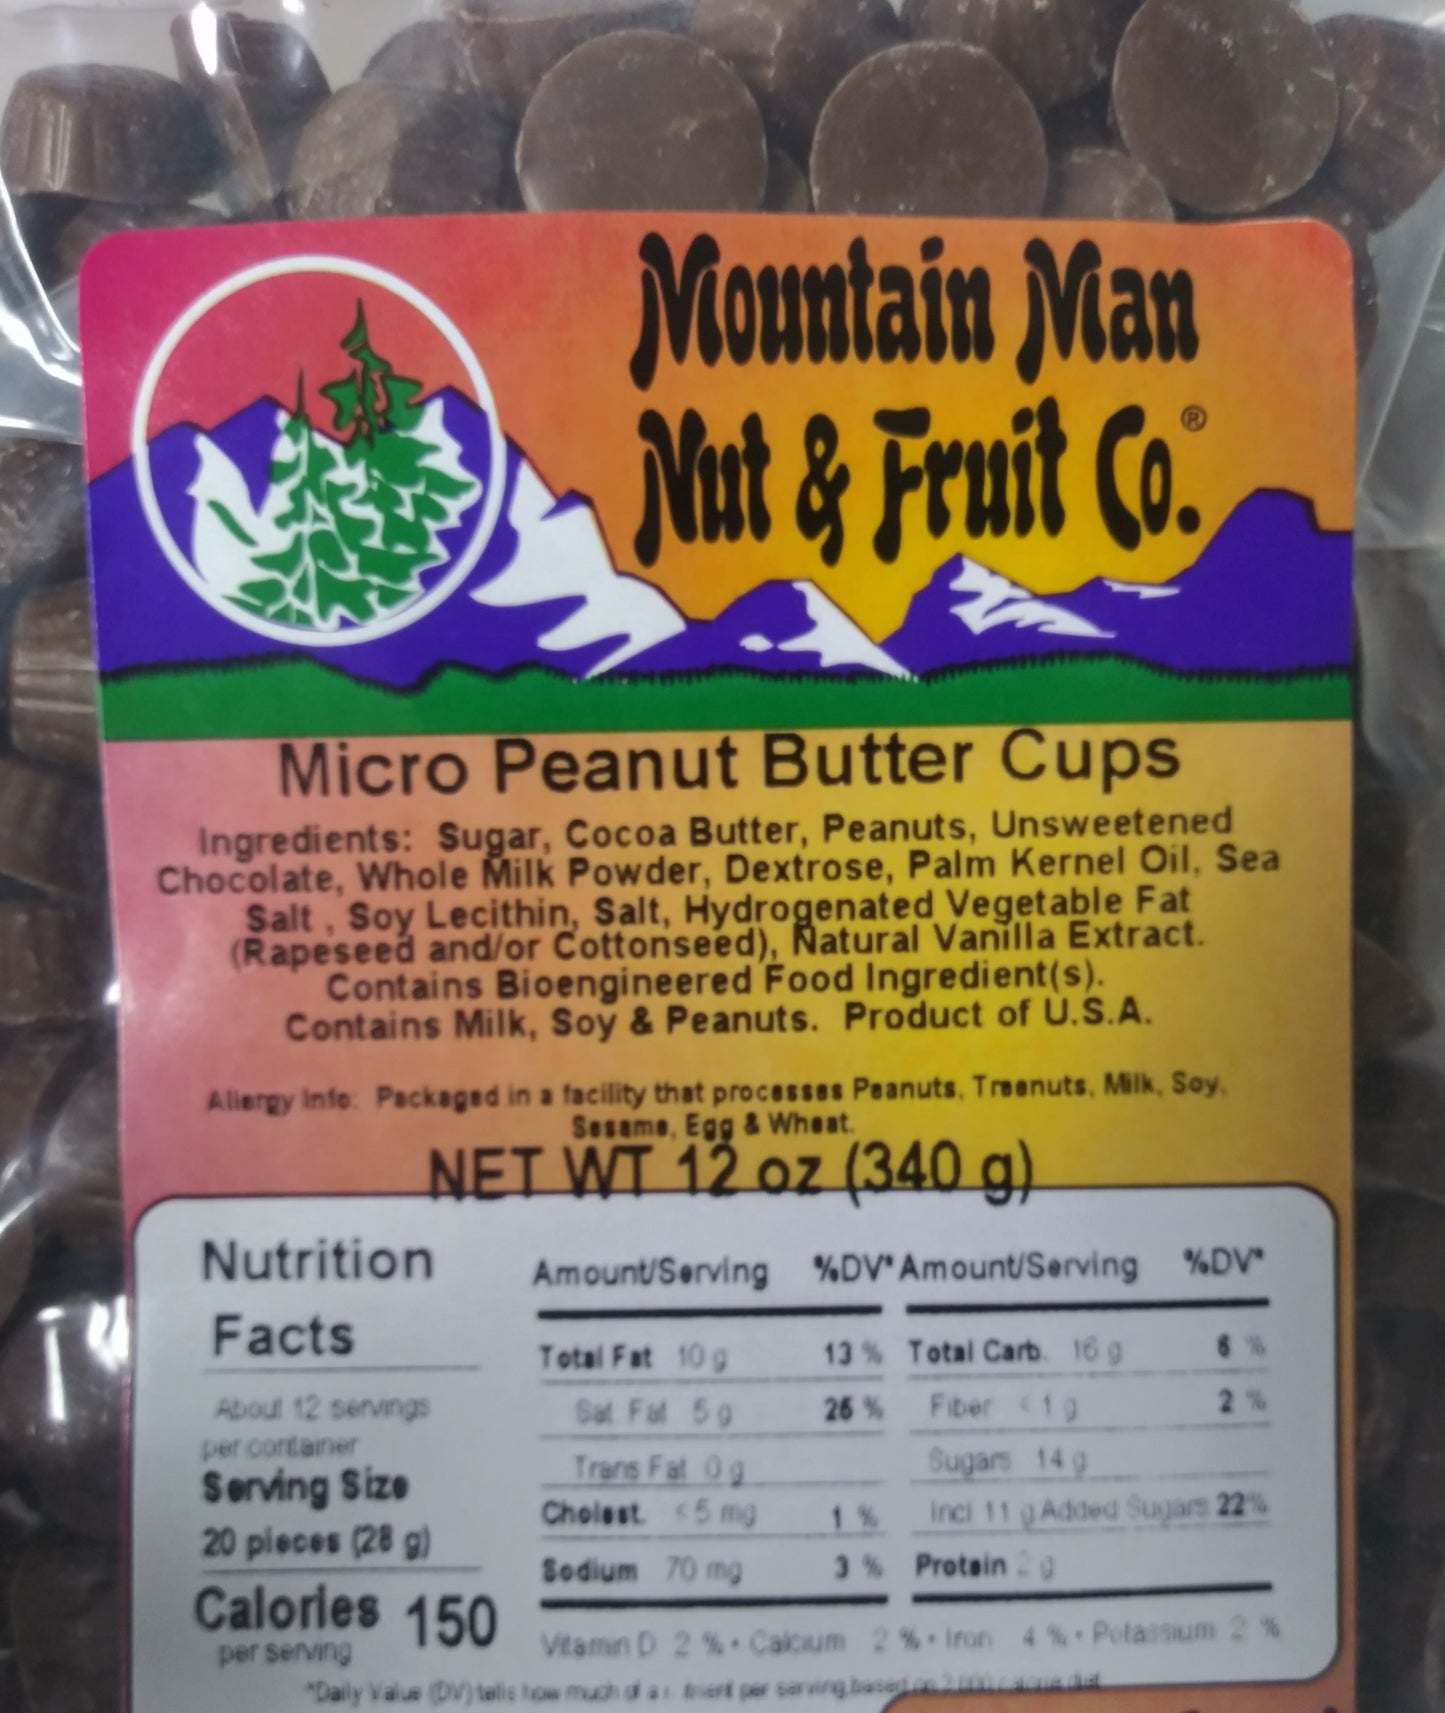 Micro Peanut Butter Cups - 12oz